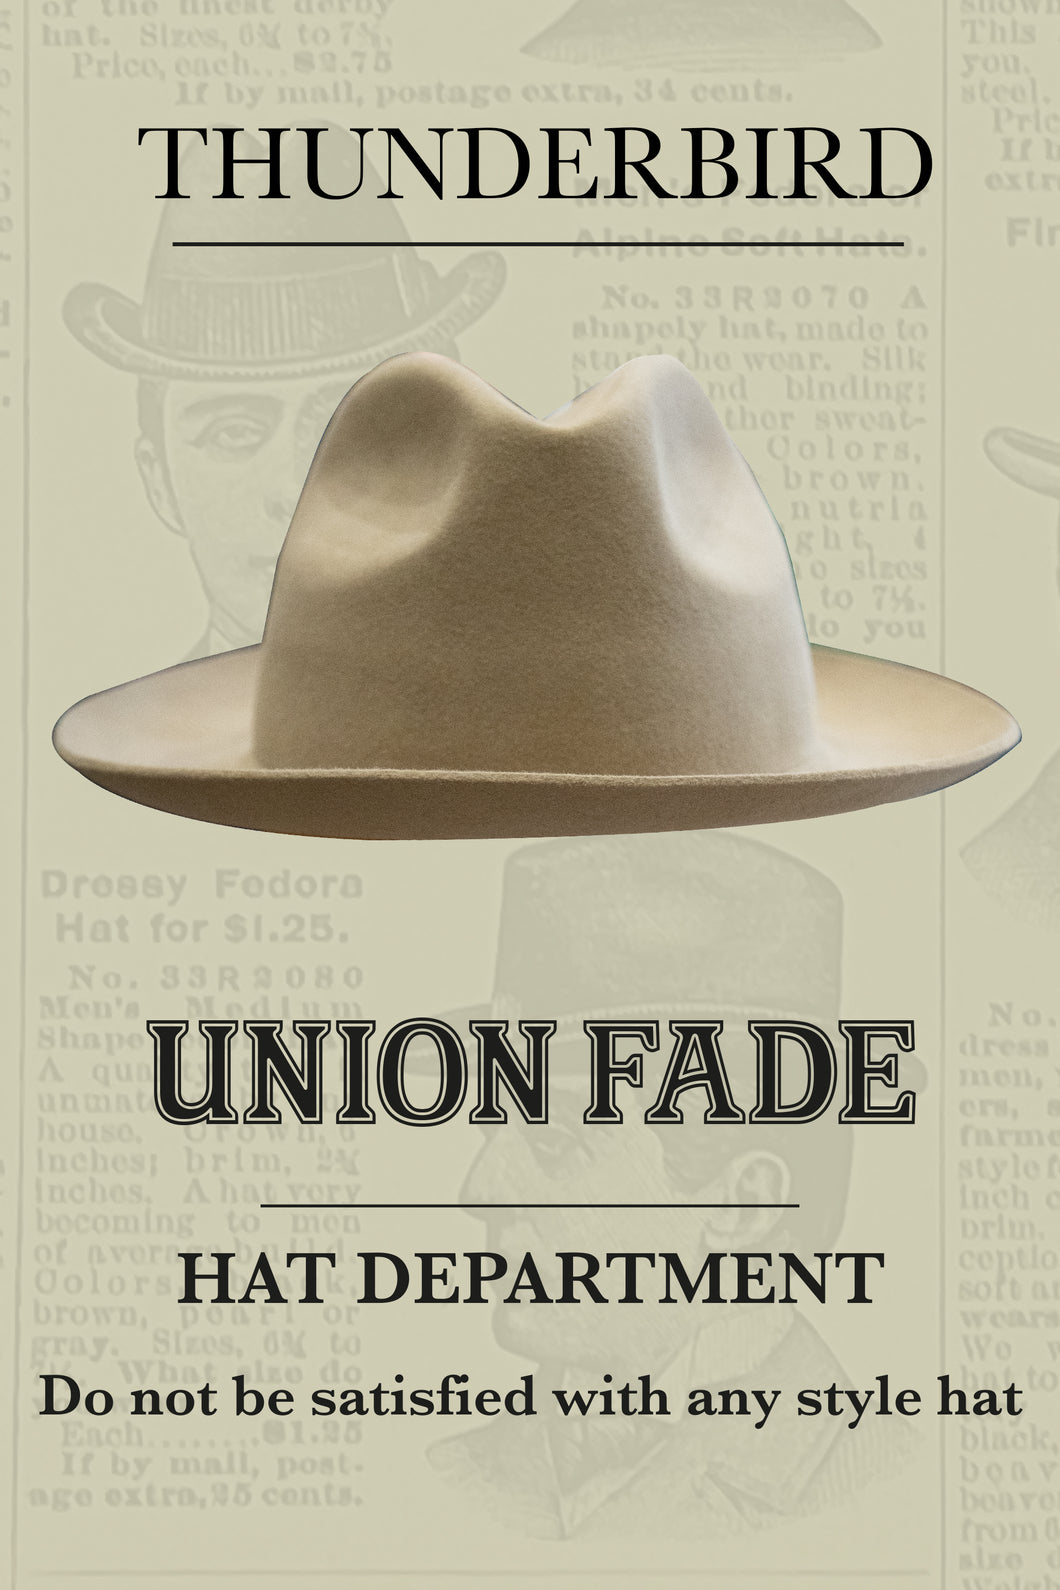 Thunderbird Union fade Hat Department